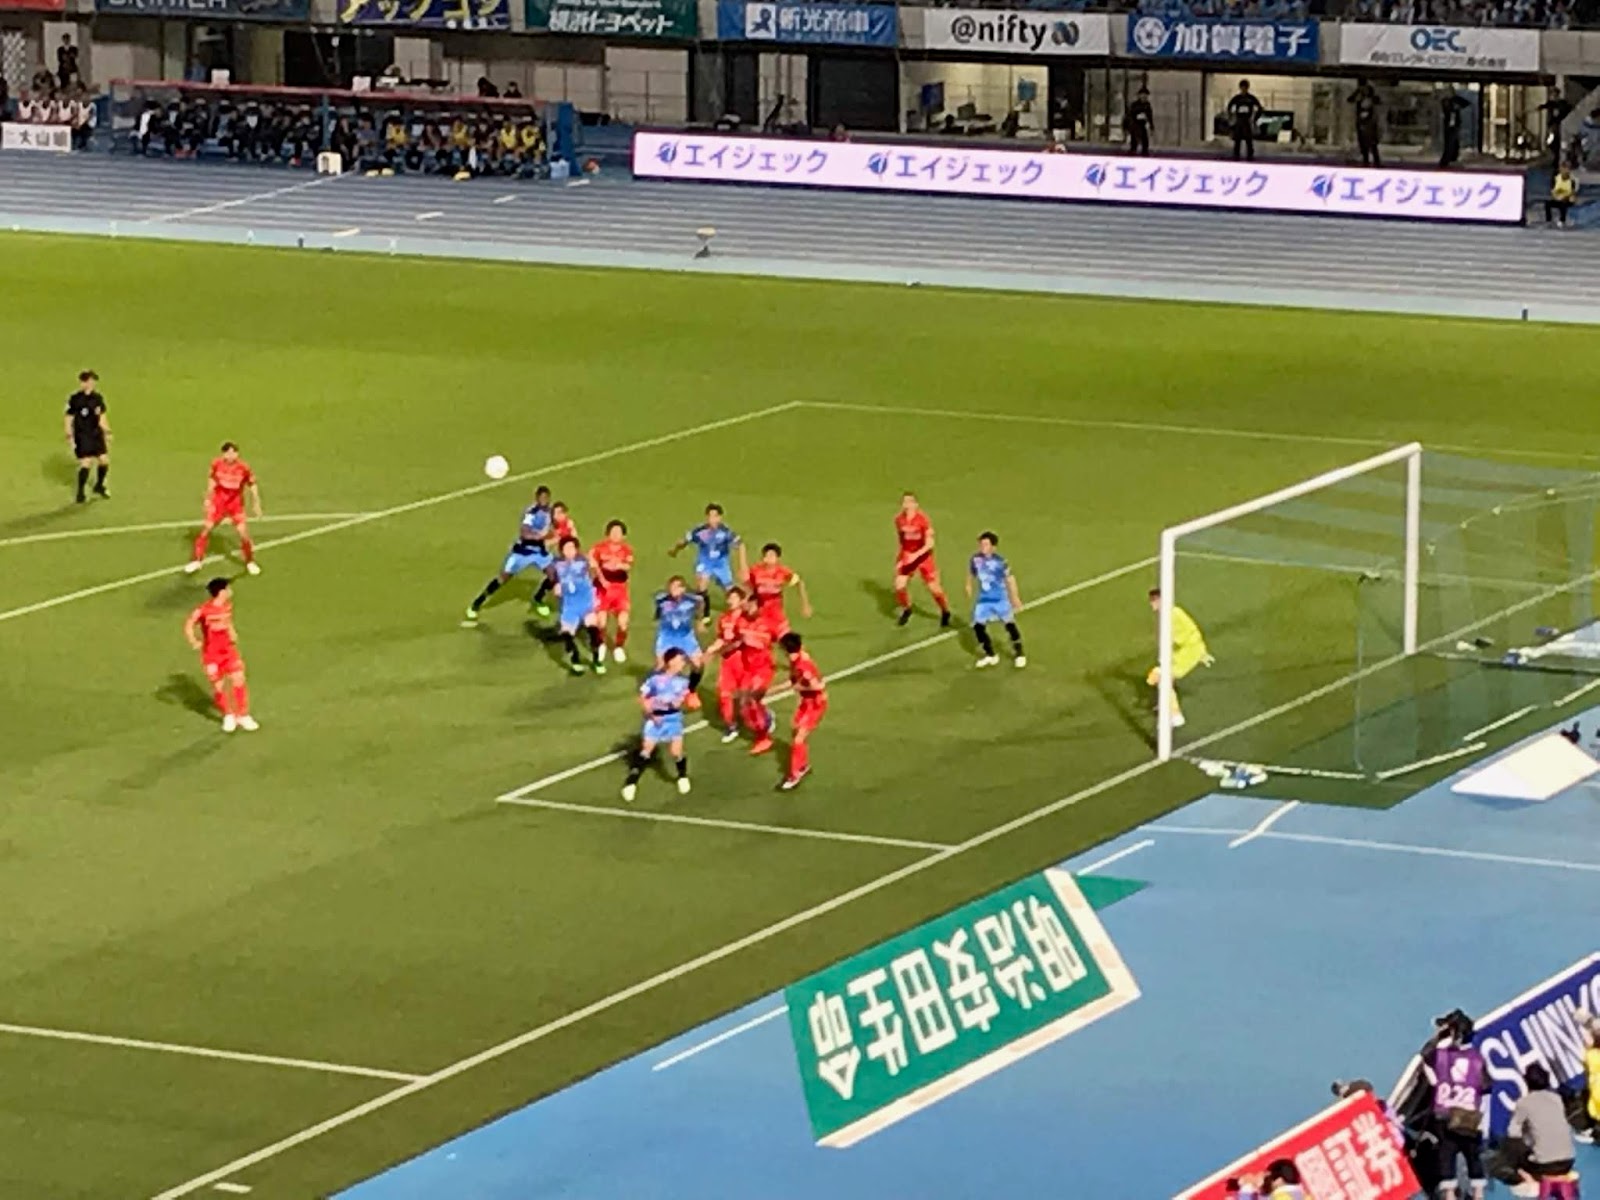 Rabbit - 川崎フロンターレ: Vs Nagoya Grampus (home) 17/5/19 - match 12